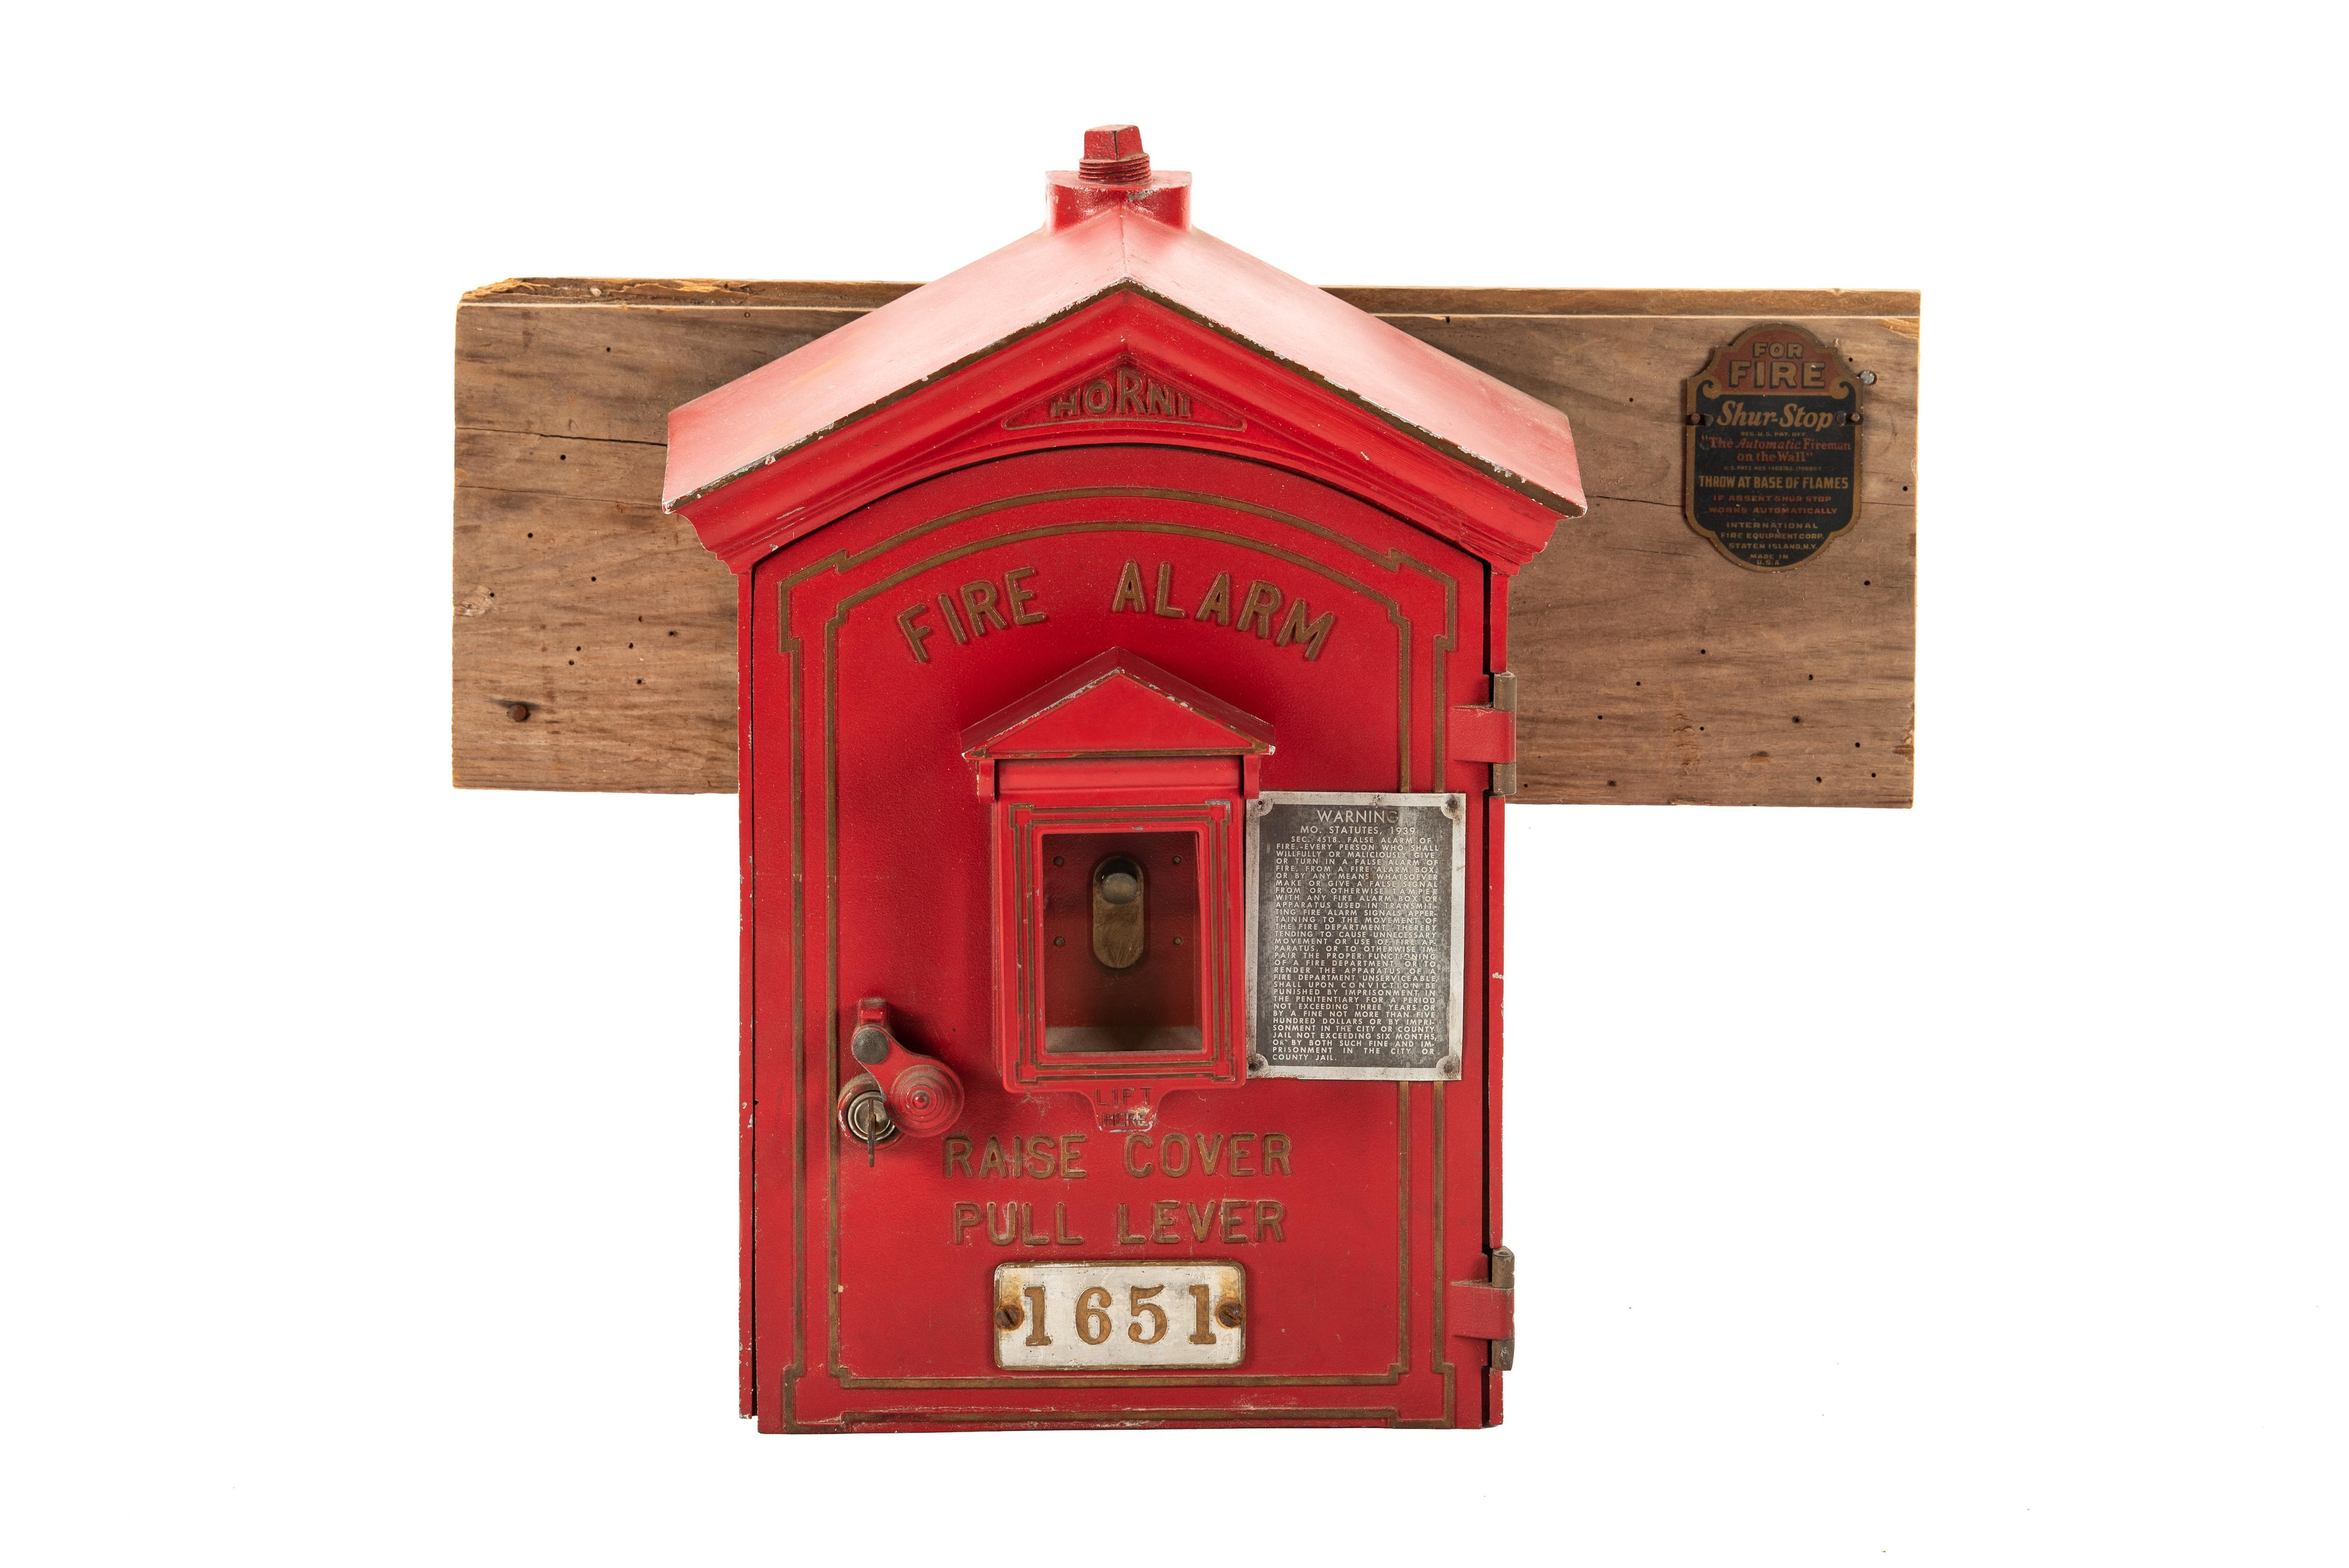 Horni Fire Alarm Box